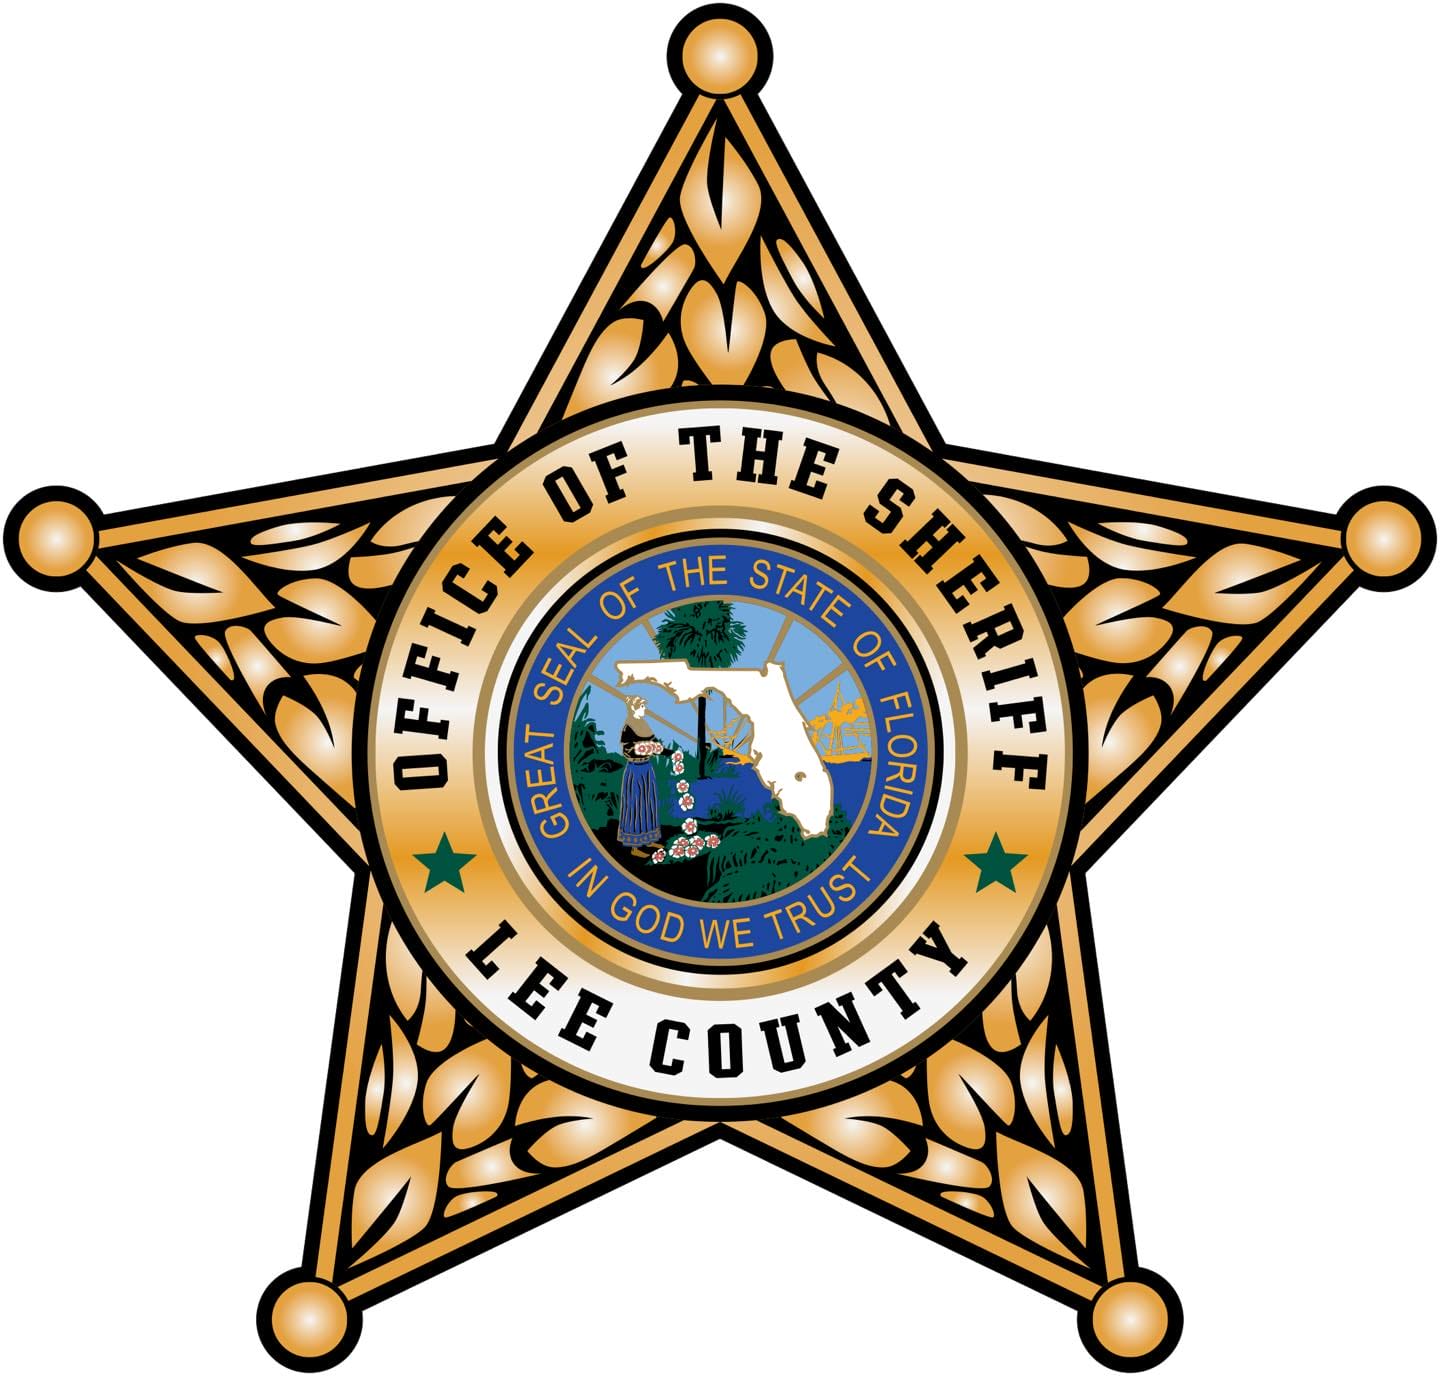 Lee county sheriff